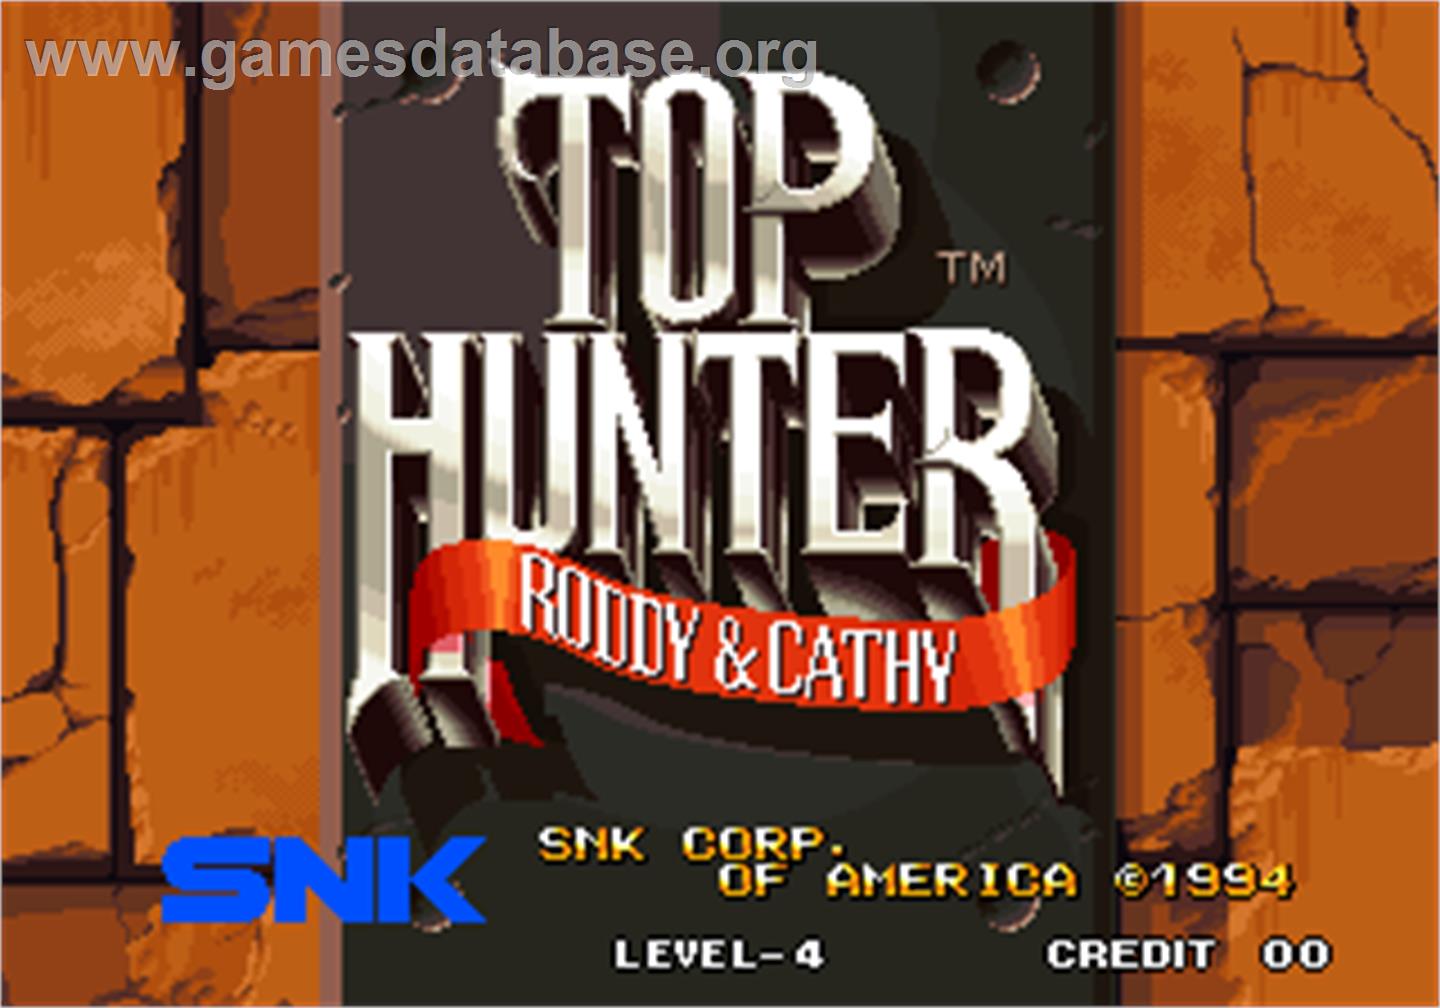 Top Hunter - Roddy & Cathy - Arcade - Artwork - Title Screen